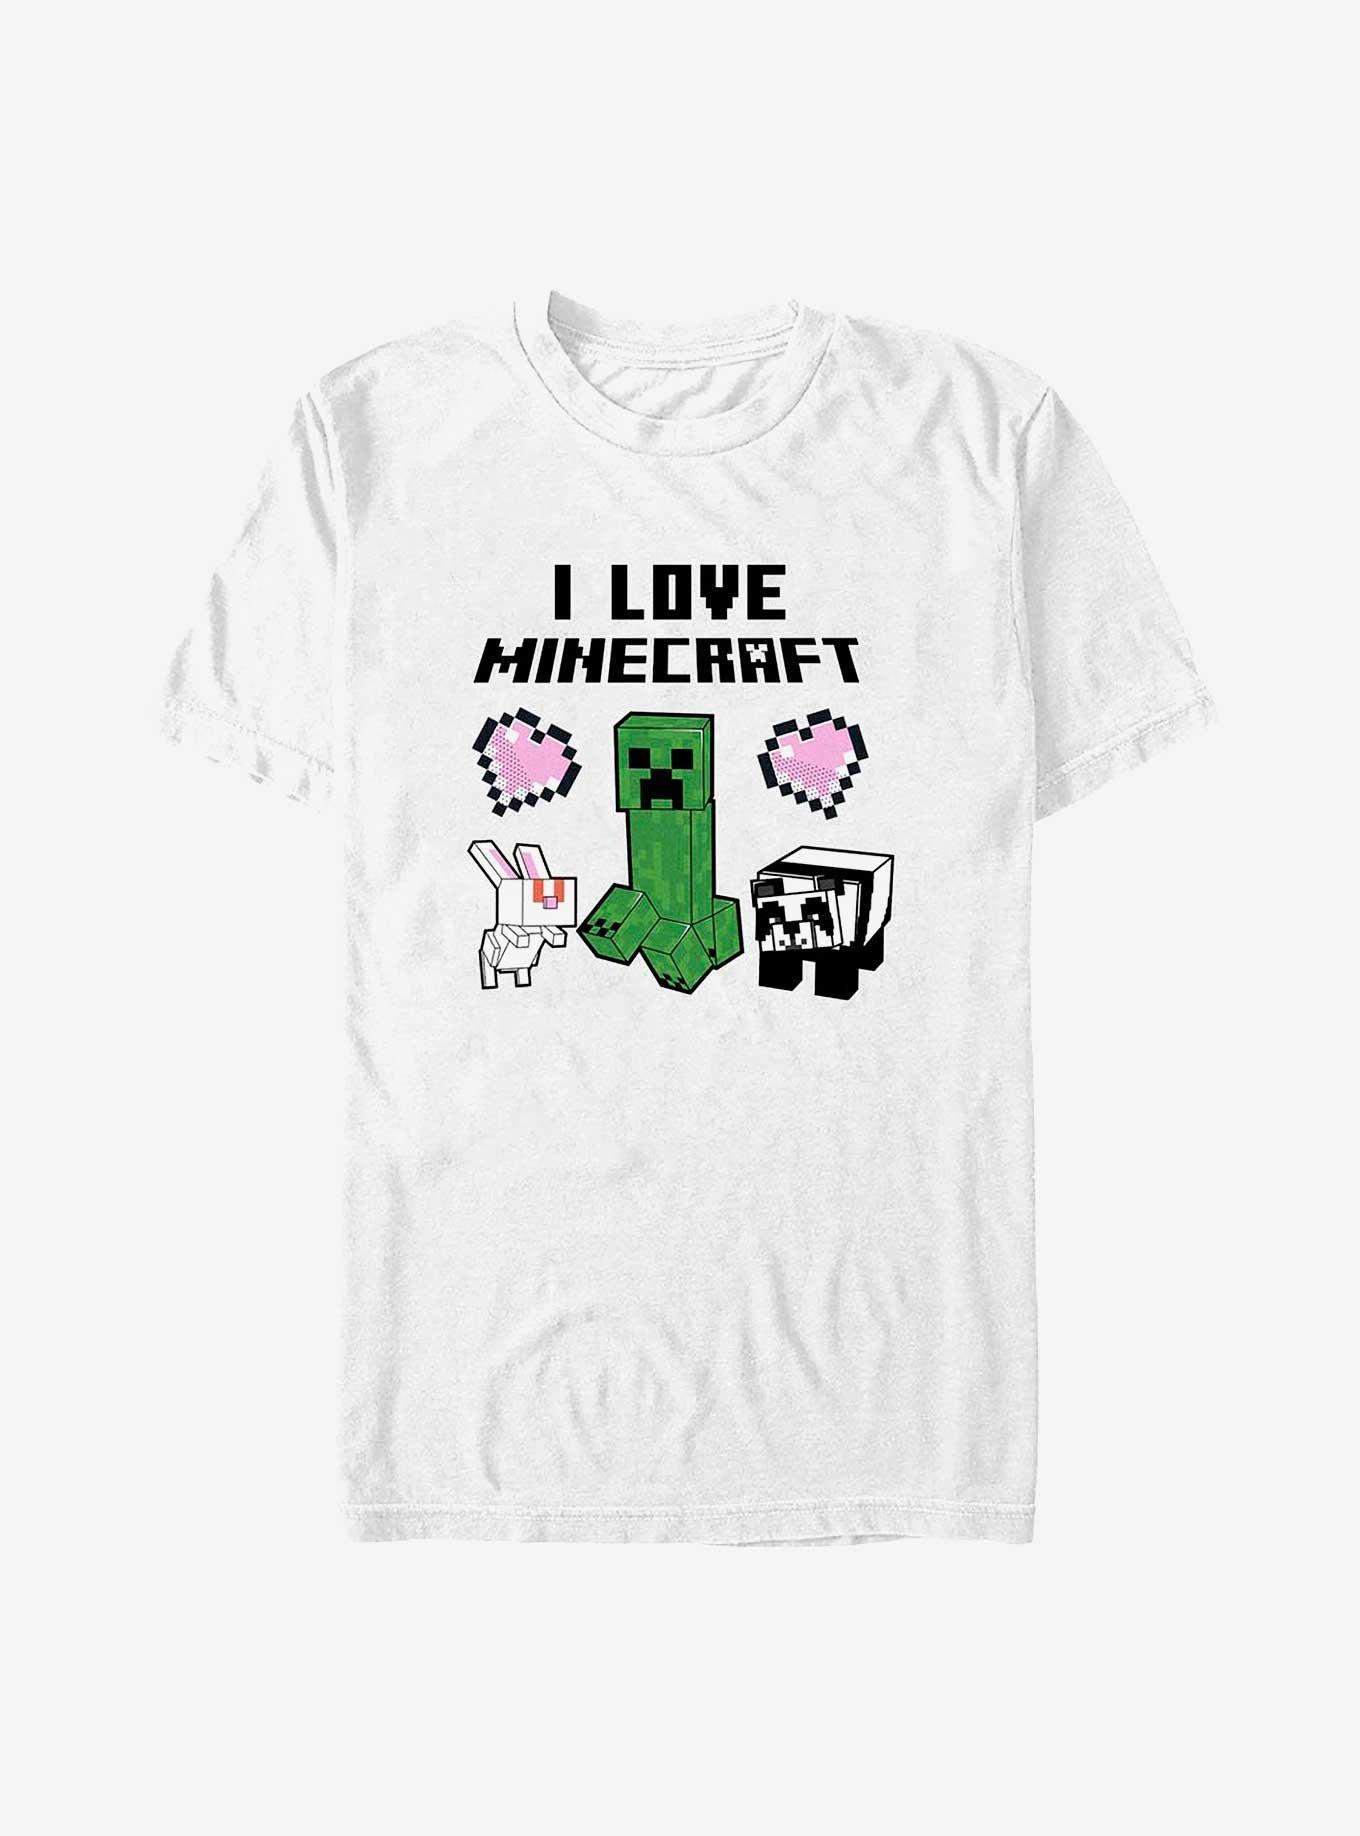 Minecraft I Love T-Shirt